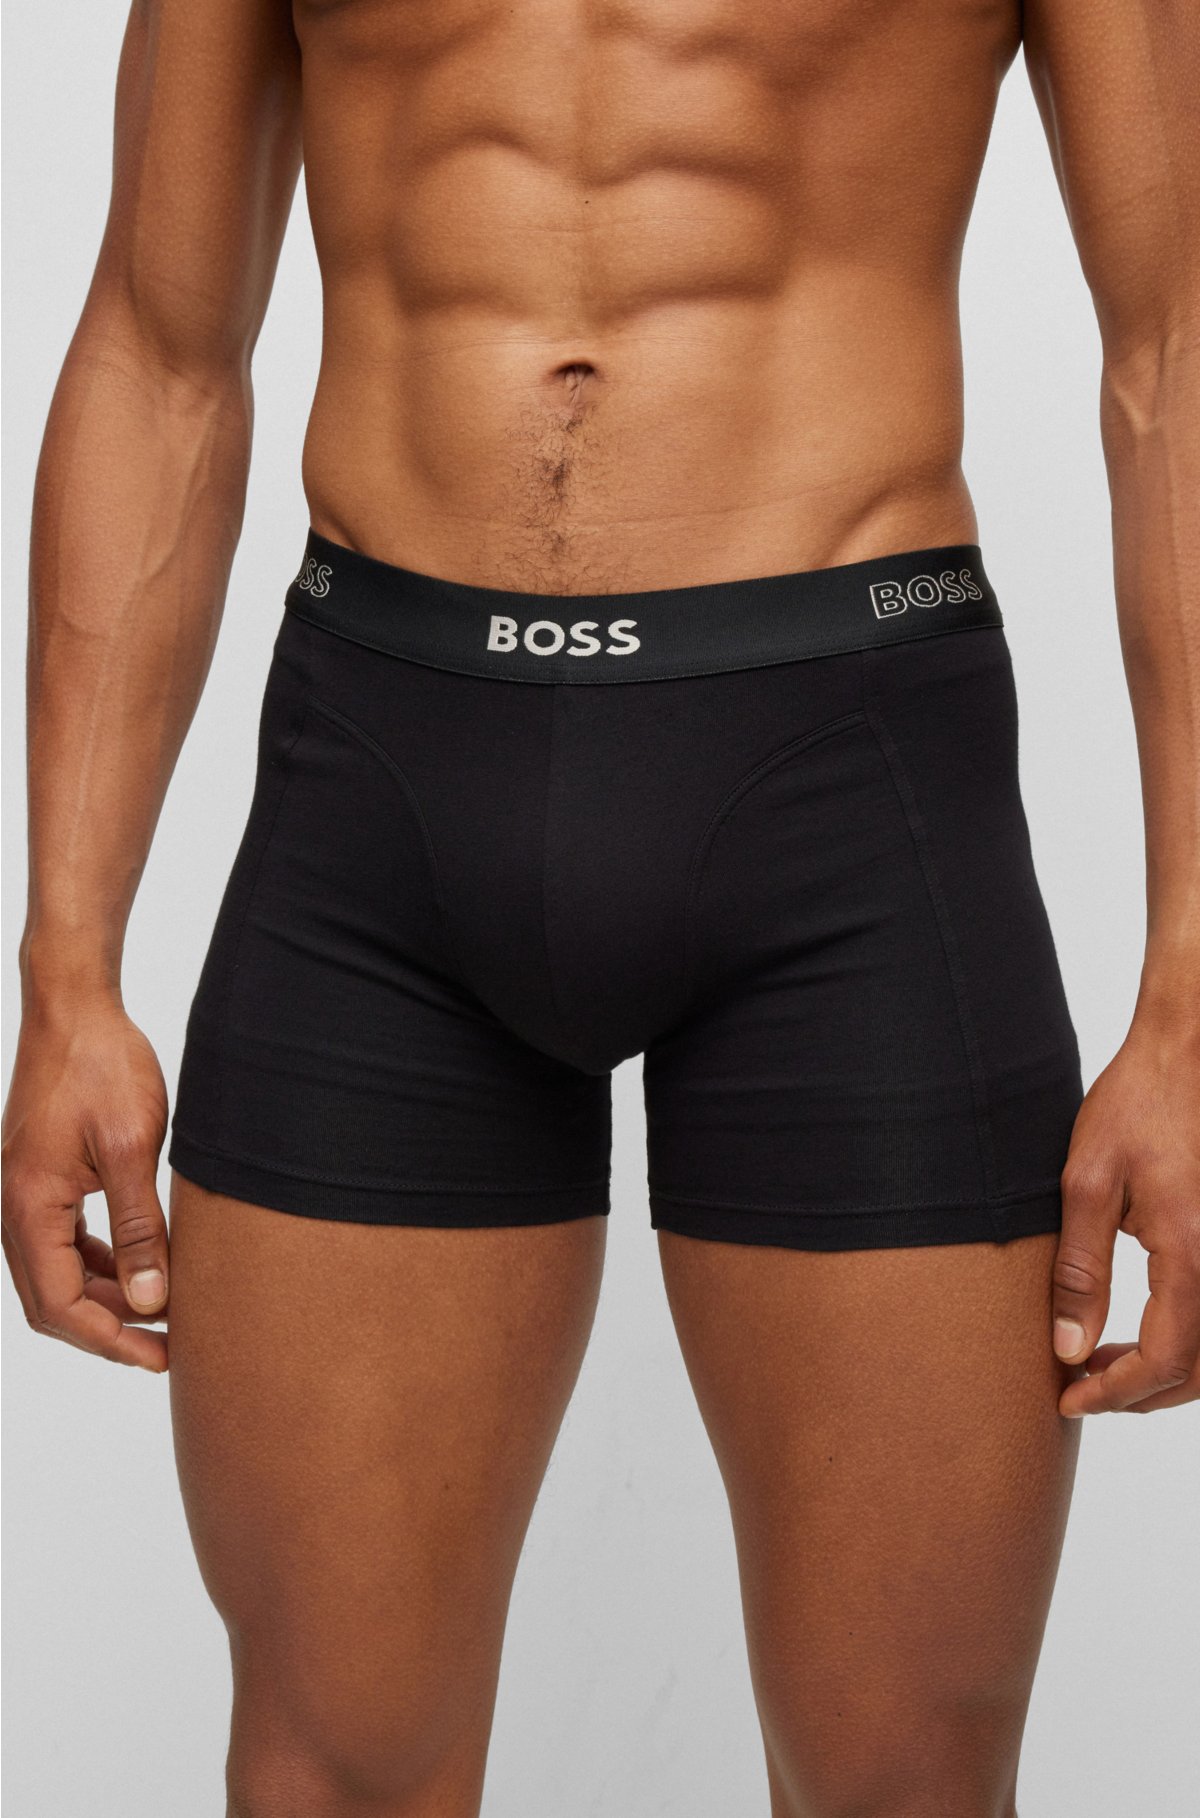 $27 Hugo Boss Men's Blue Micro Modal Stretch Underwear 50398706 Boxer Brief  S